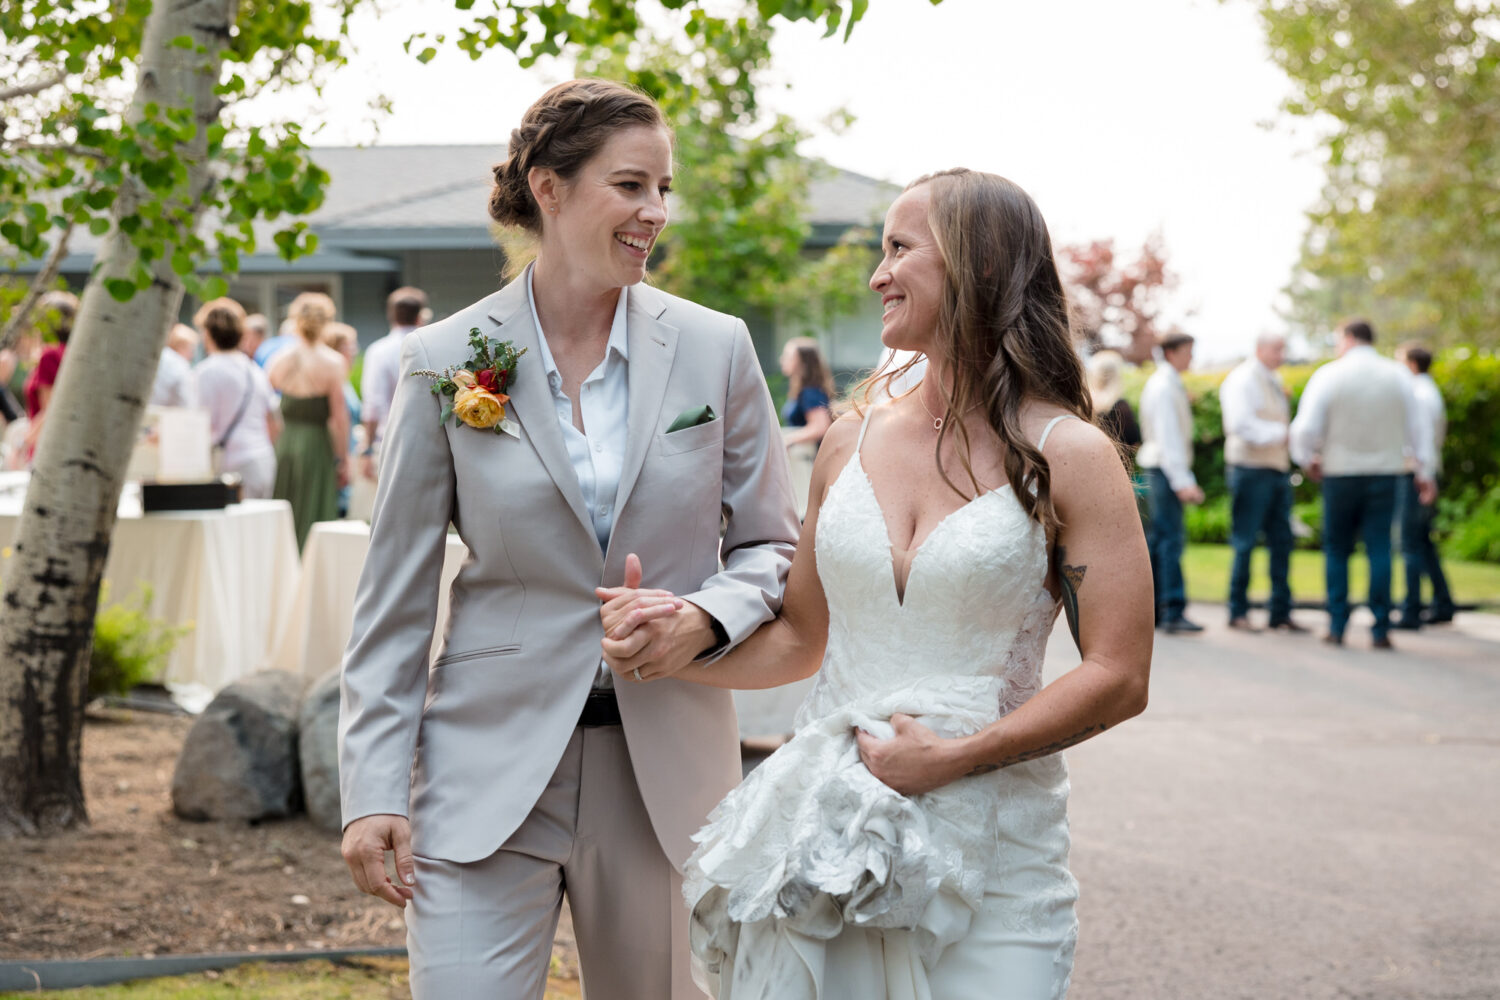 Two brides walk hand-in-hand at their backyard wedding.